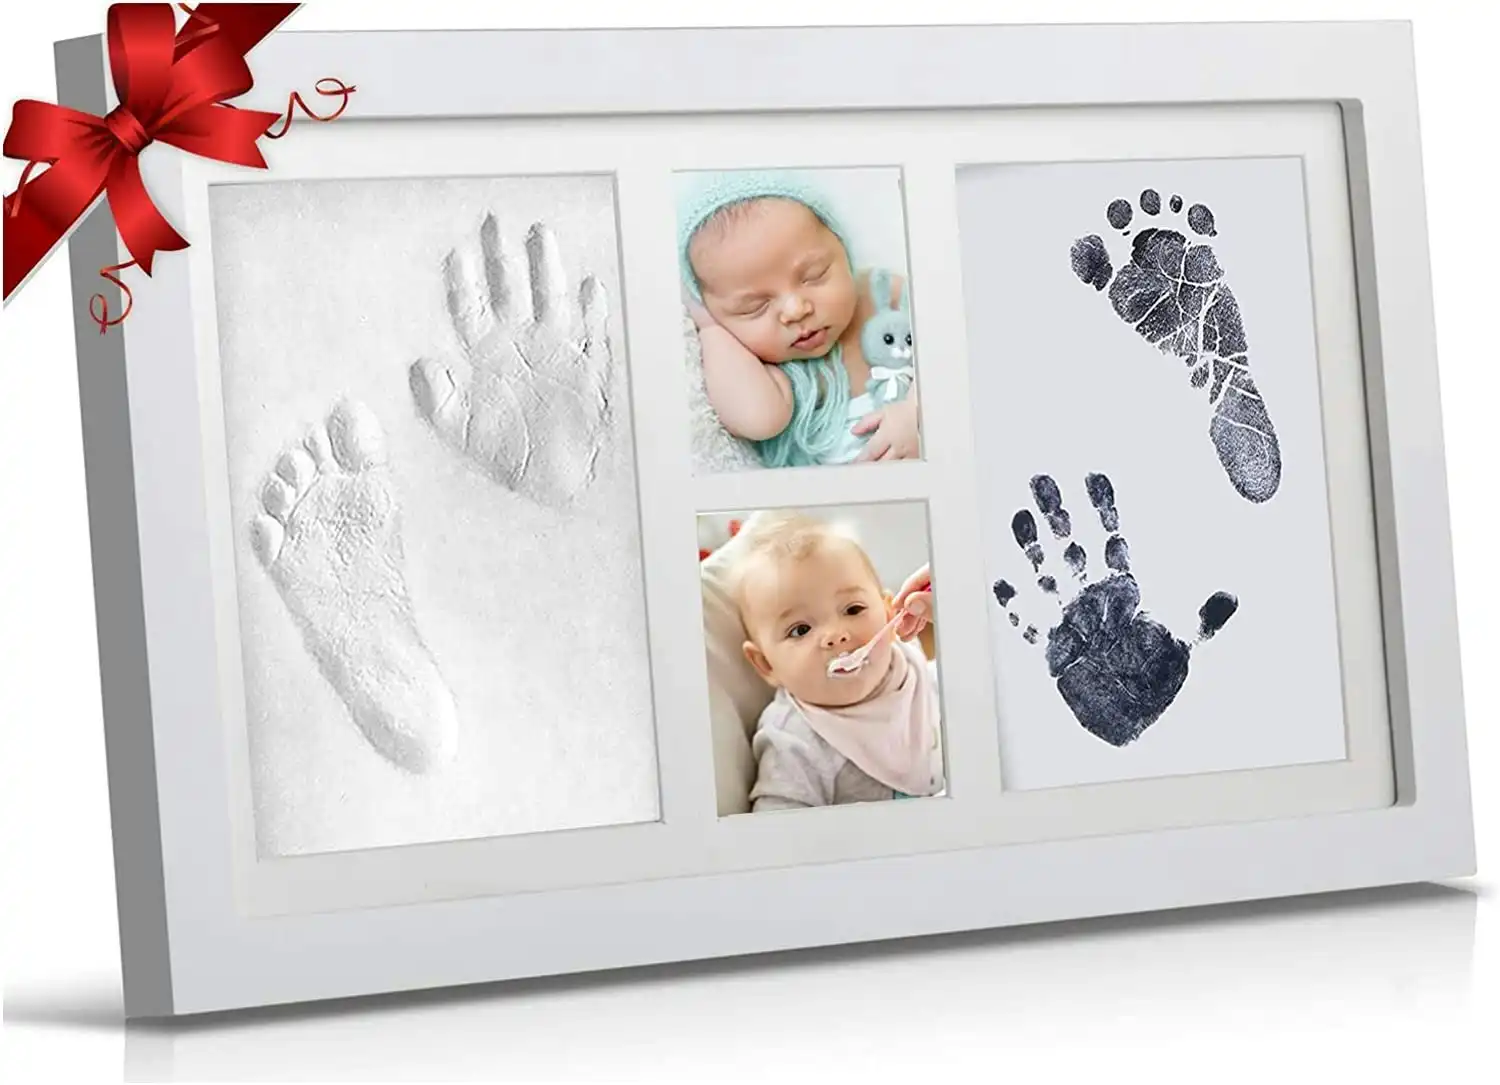 Babyprints Handprint and Footprint Photo Frame Kit